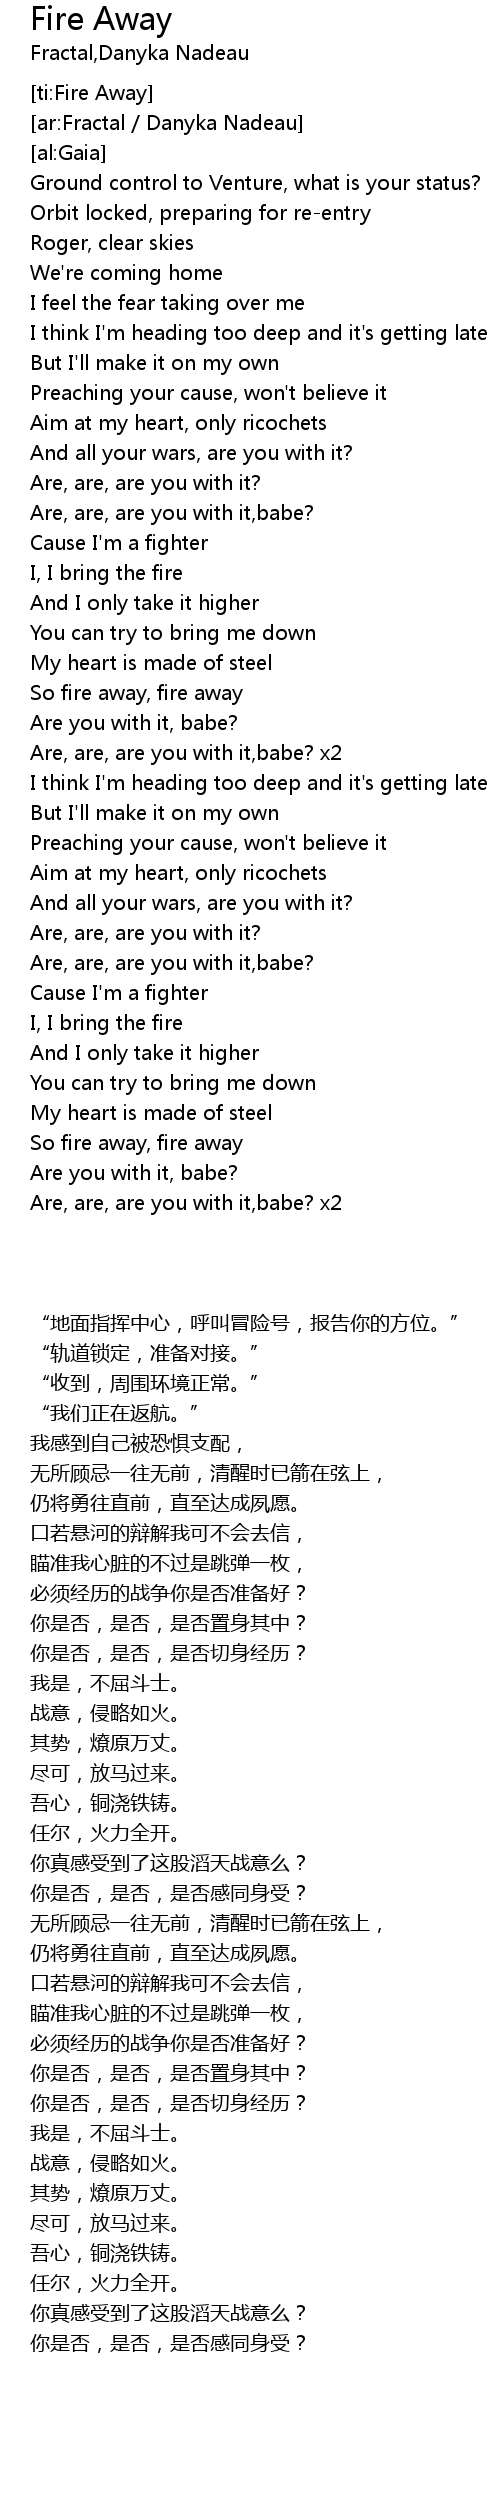 Fire Away Lyrics